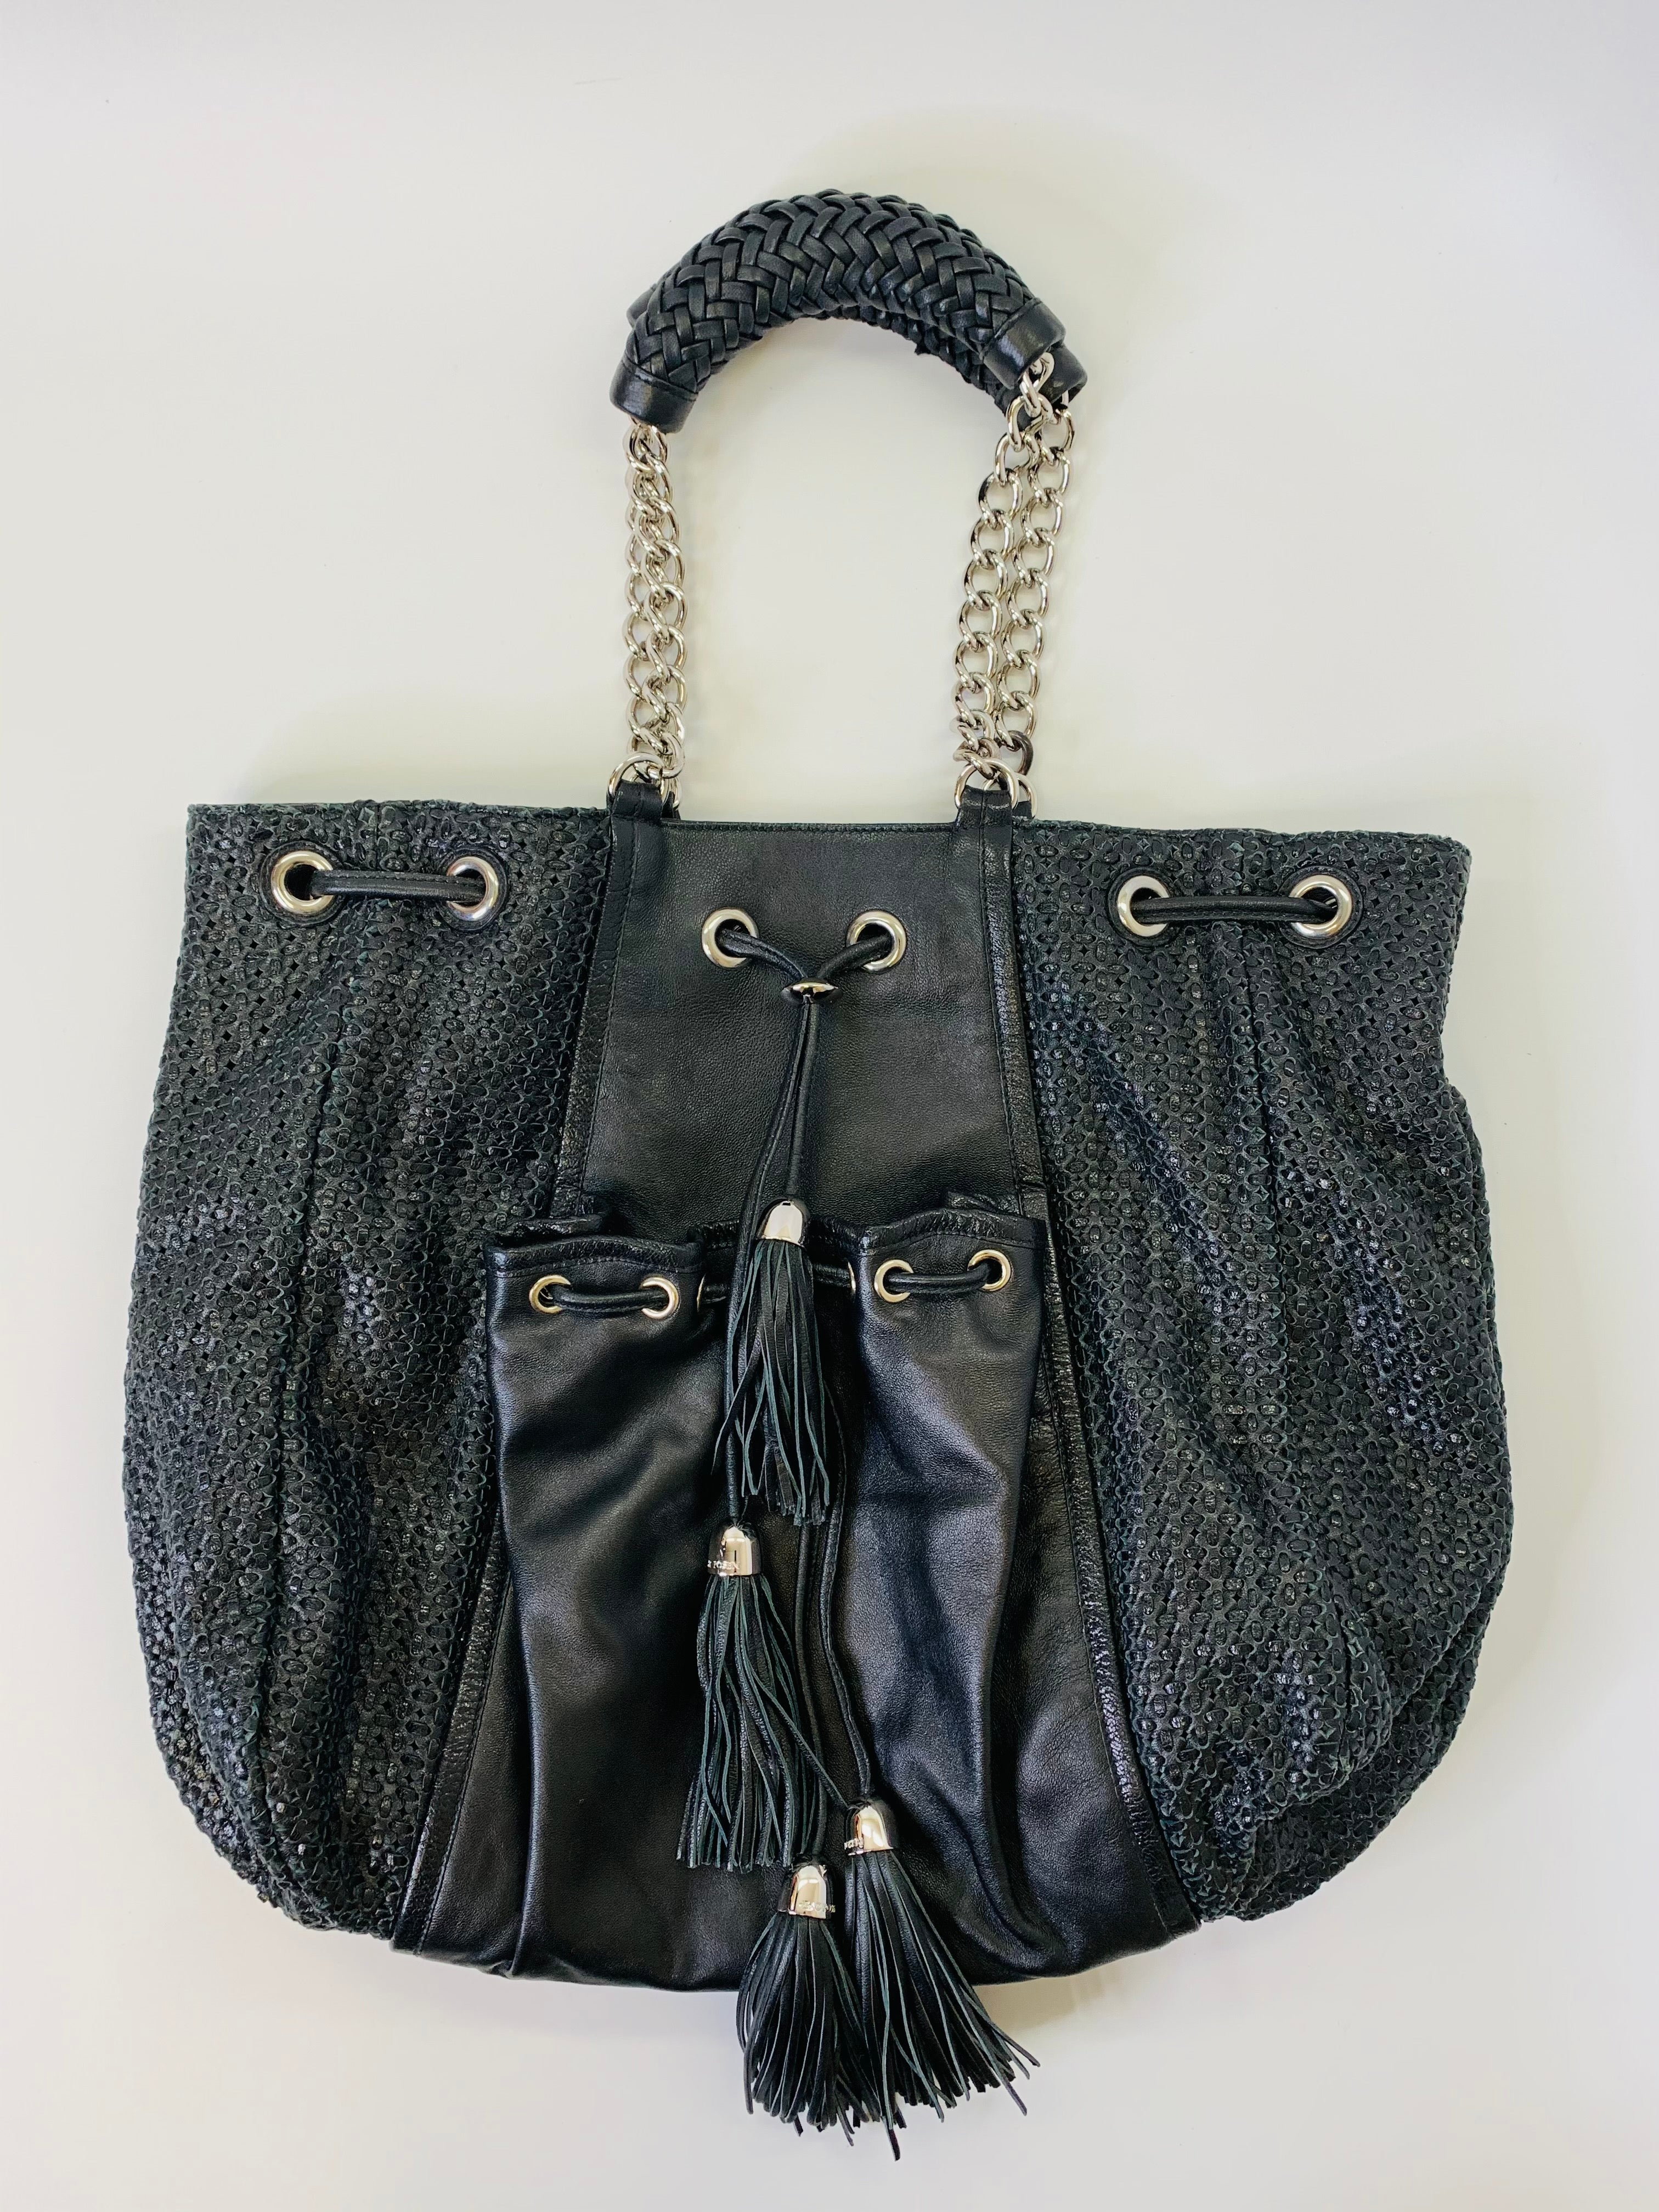 ZAC POSEN Large Shirley Bow Black Leather Tote Bag Sachel Purse Read Details